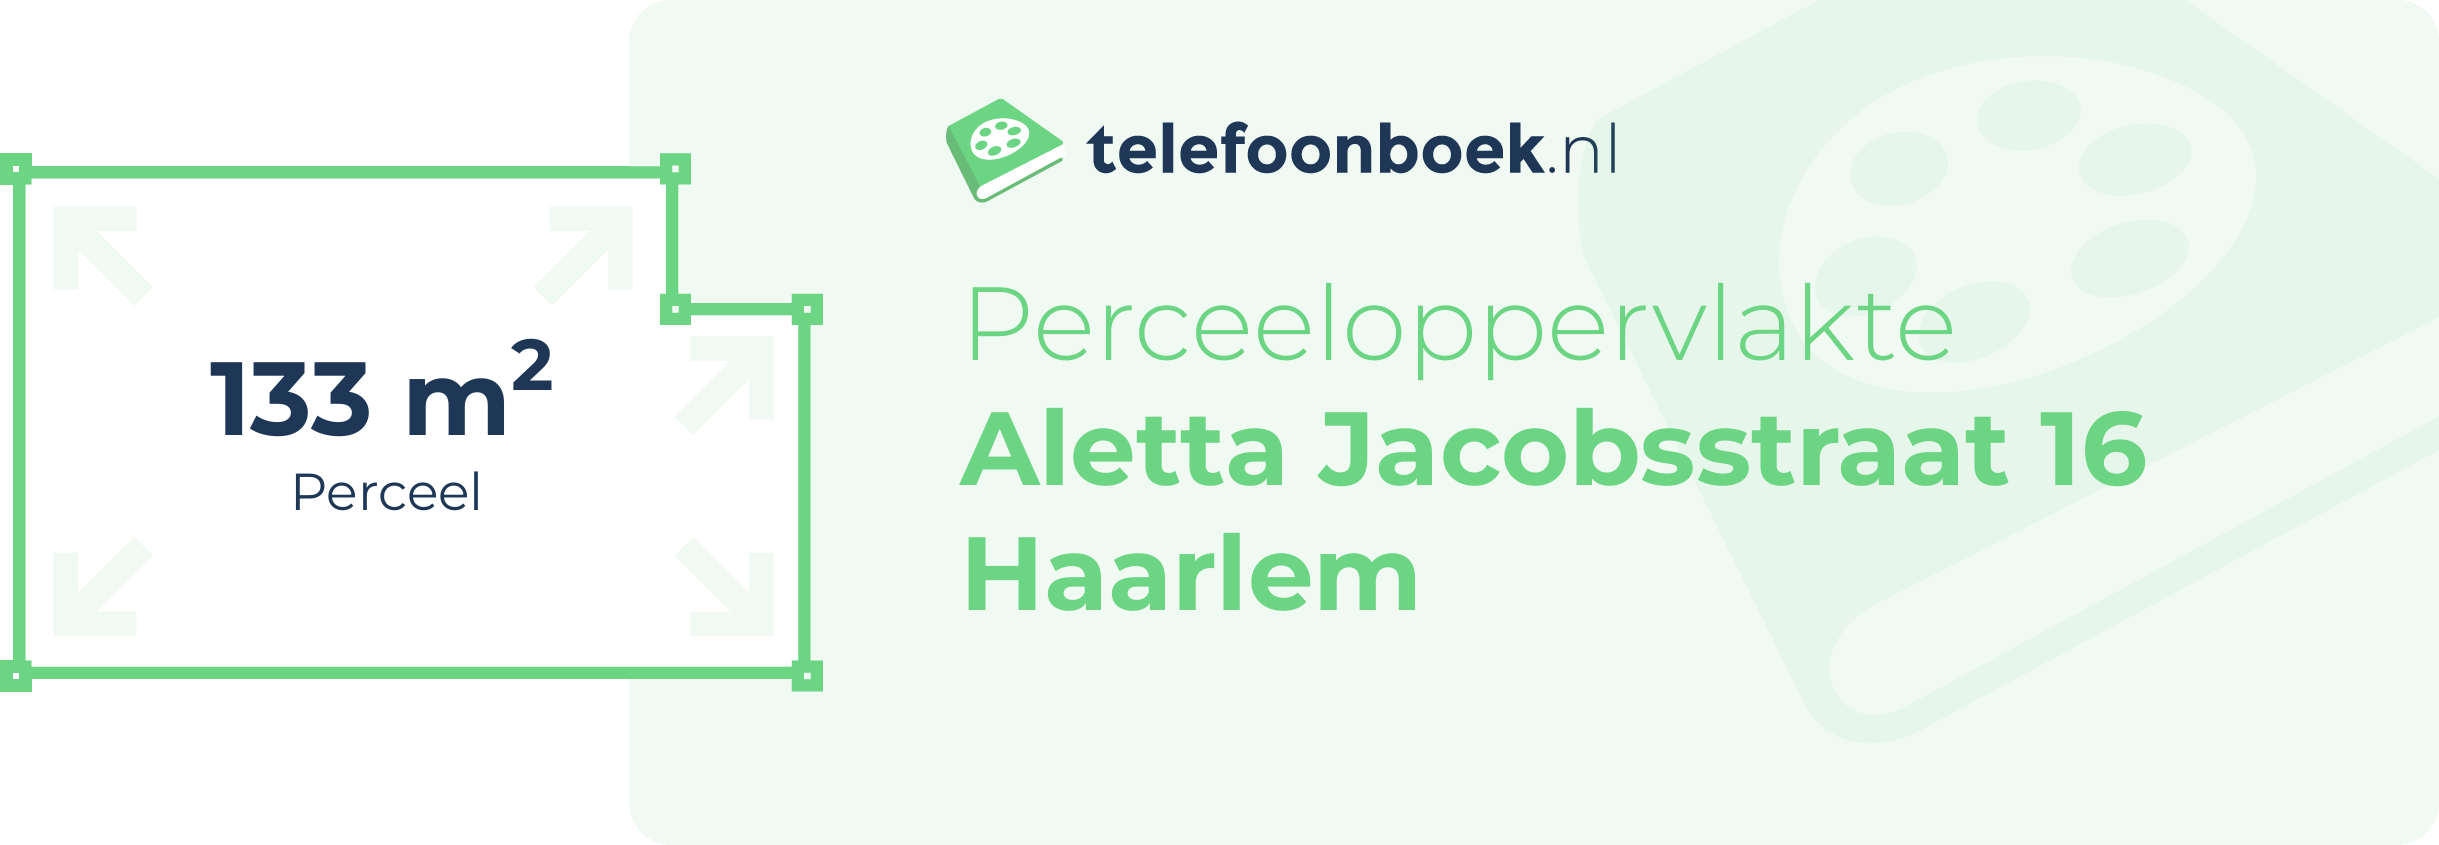 Perceeloppervlakte Aletta Jacobsstraat 16 Haarlem